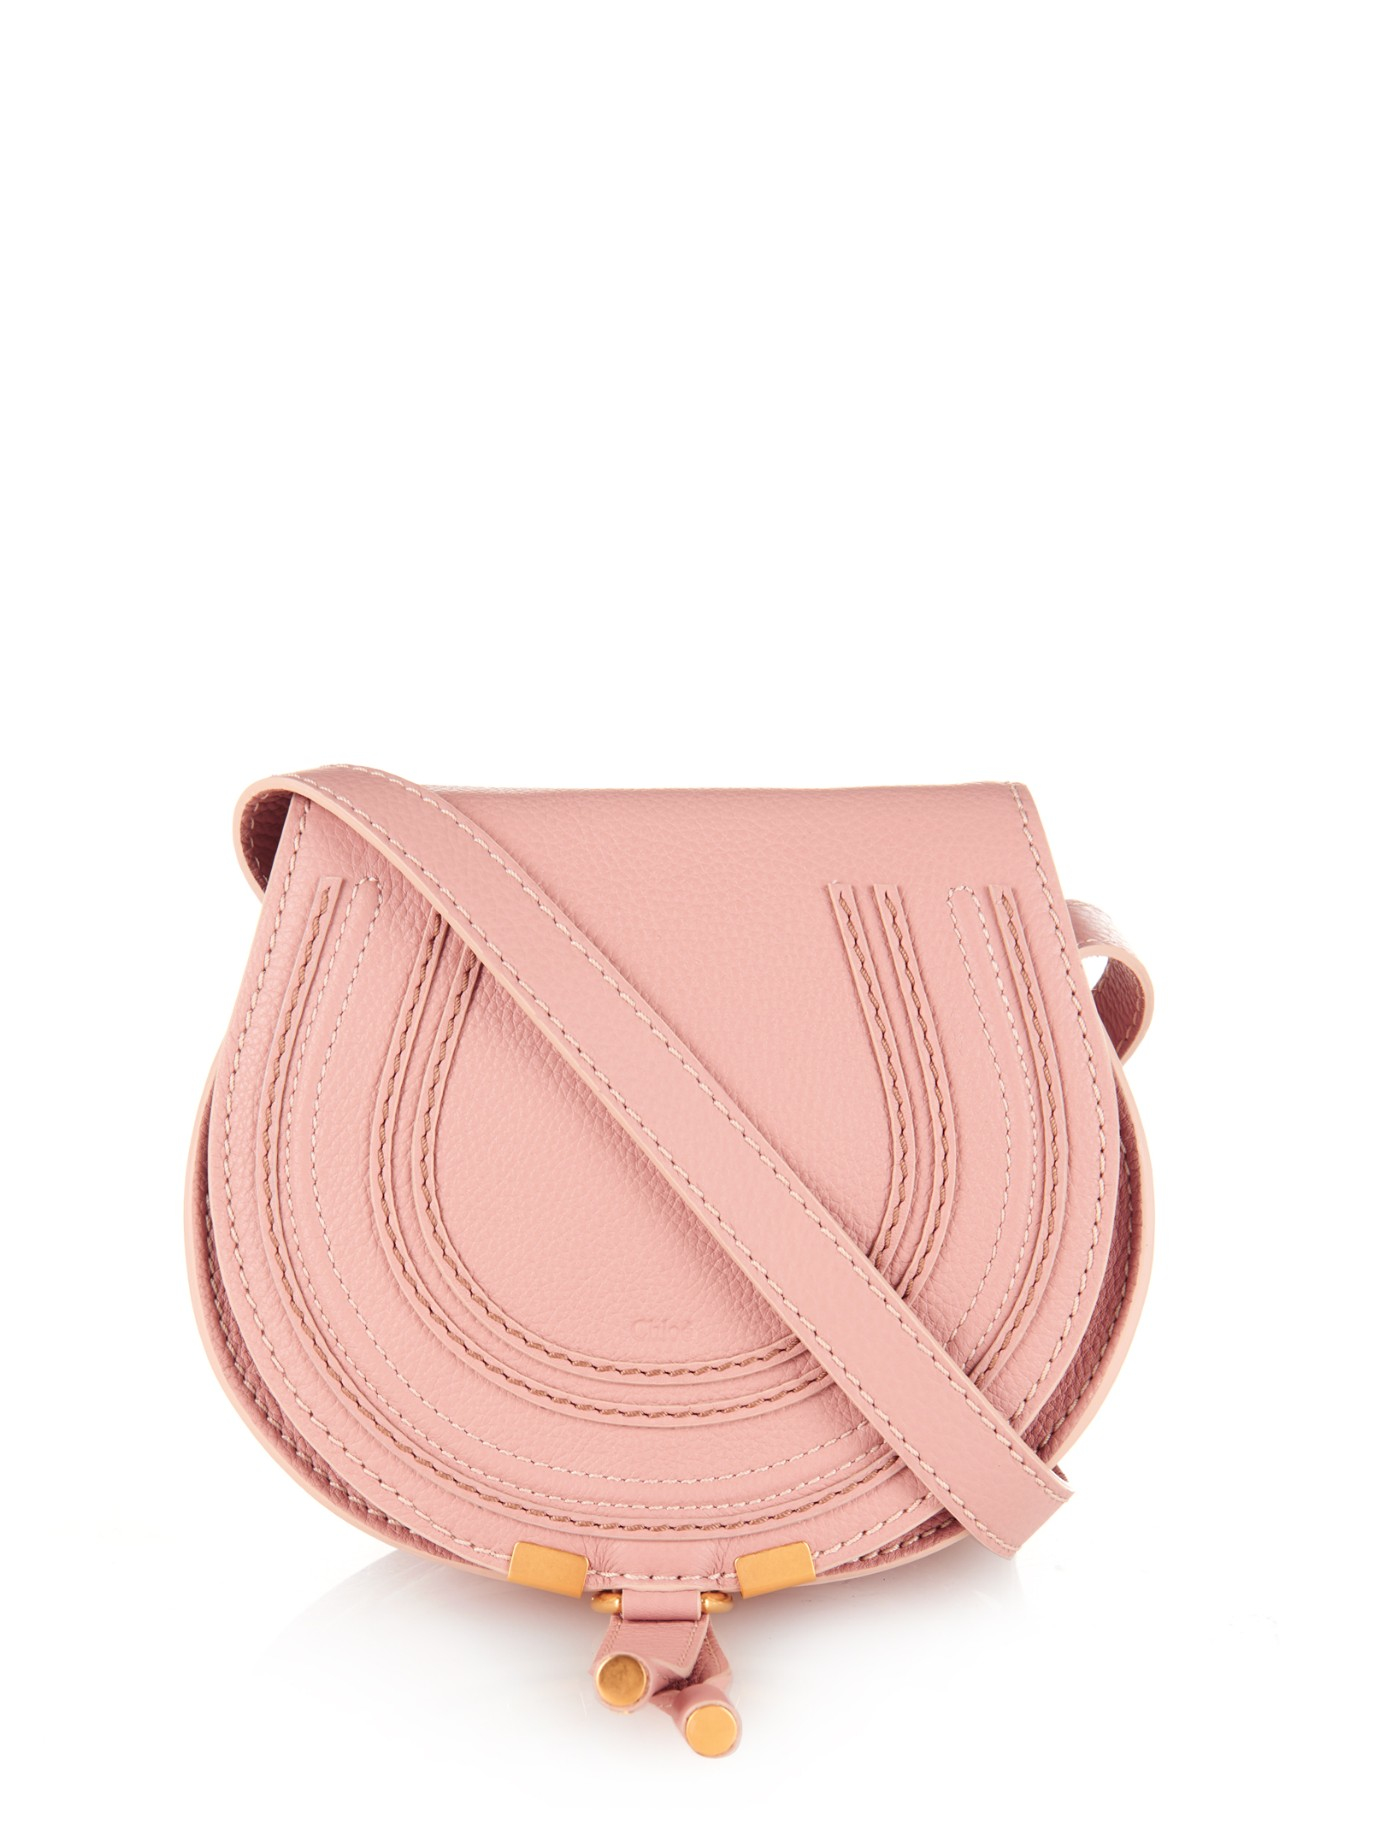 Lyst - Chloé Marcie Mini Leather Cross-Body Bag in Pink